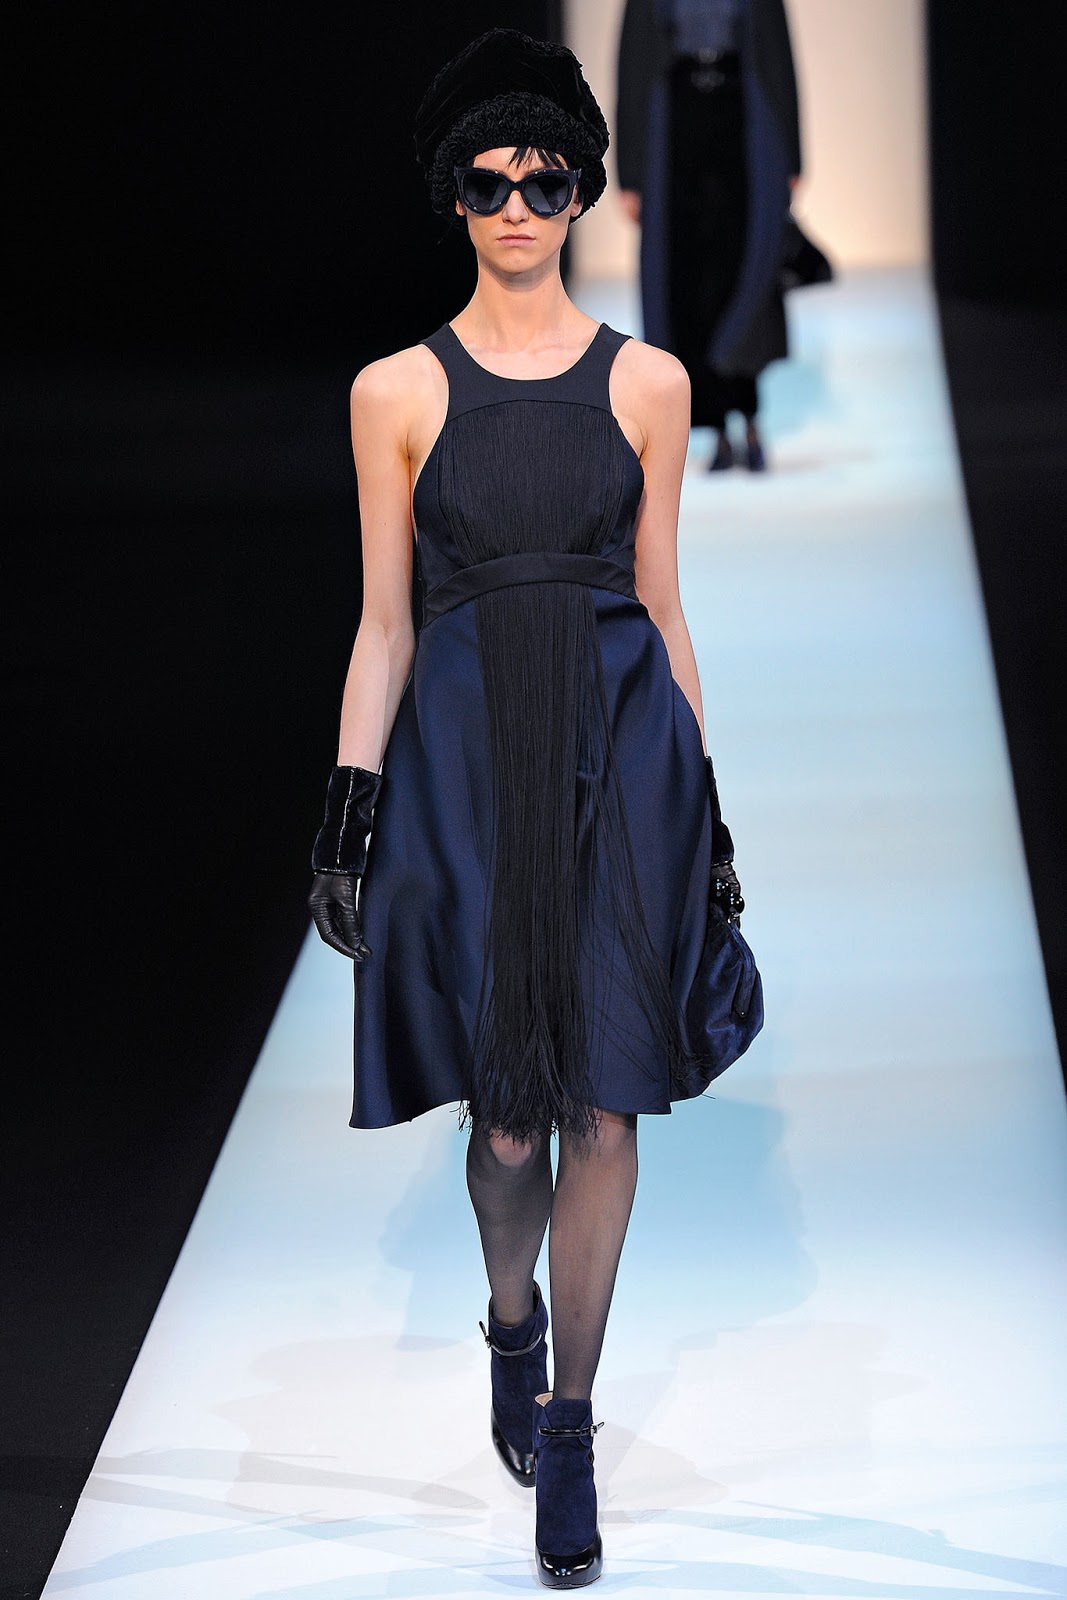 giorgio armani f/w 13.14 milan | visual optimism; fashion editorials ...